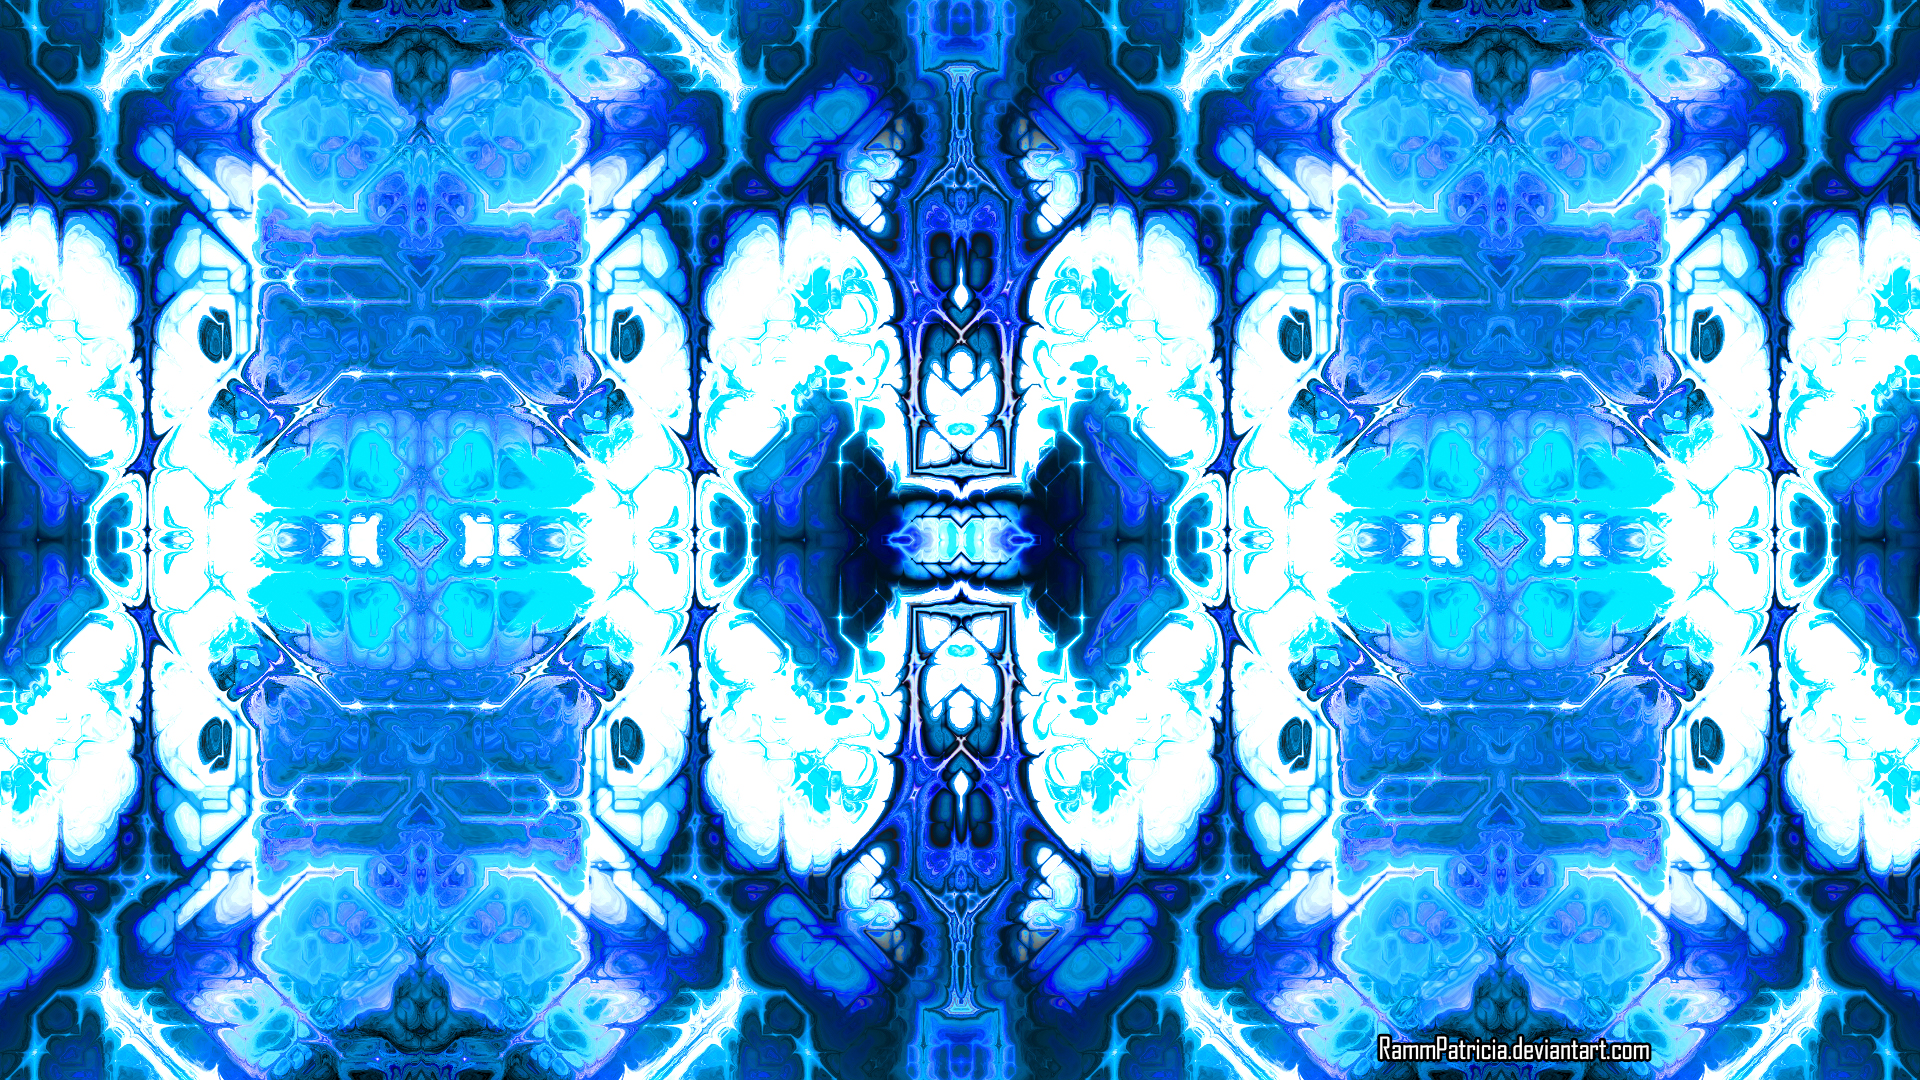 General 1920x1080 RammPatricia abstract digital art science fiction watermarked symmetry kaleidoscope technology blue cyan